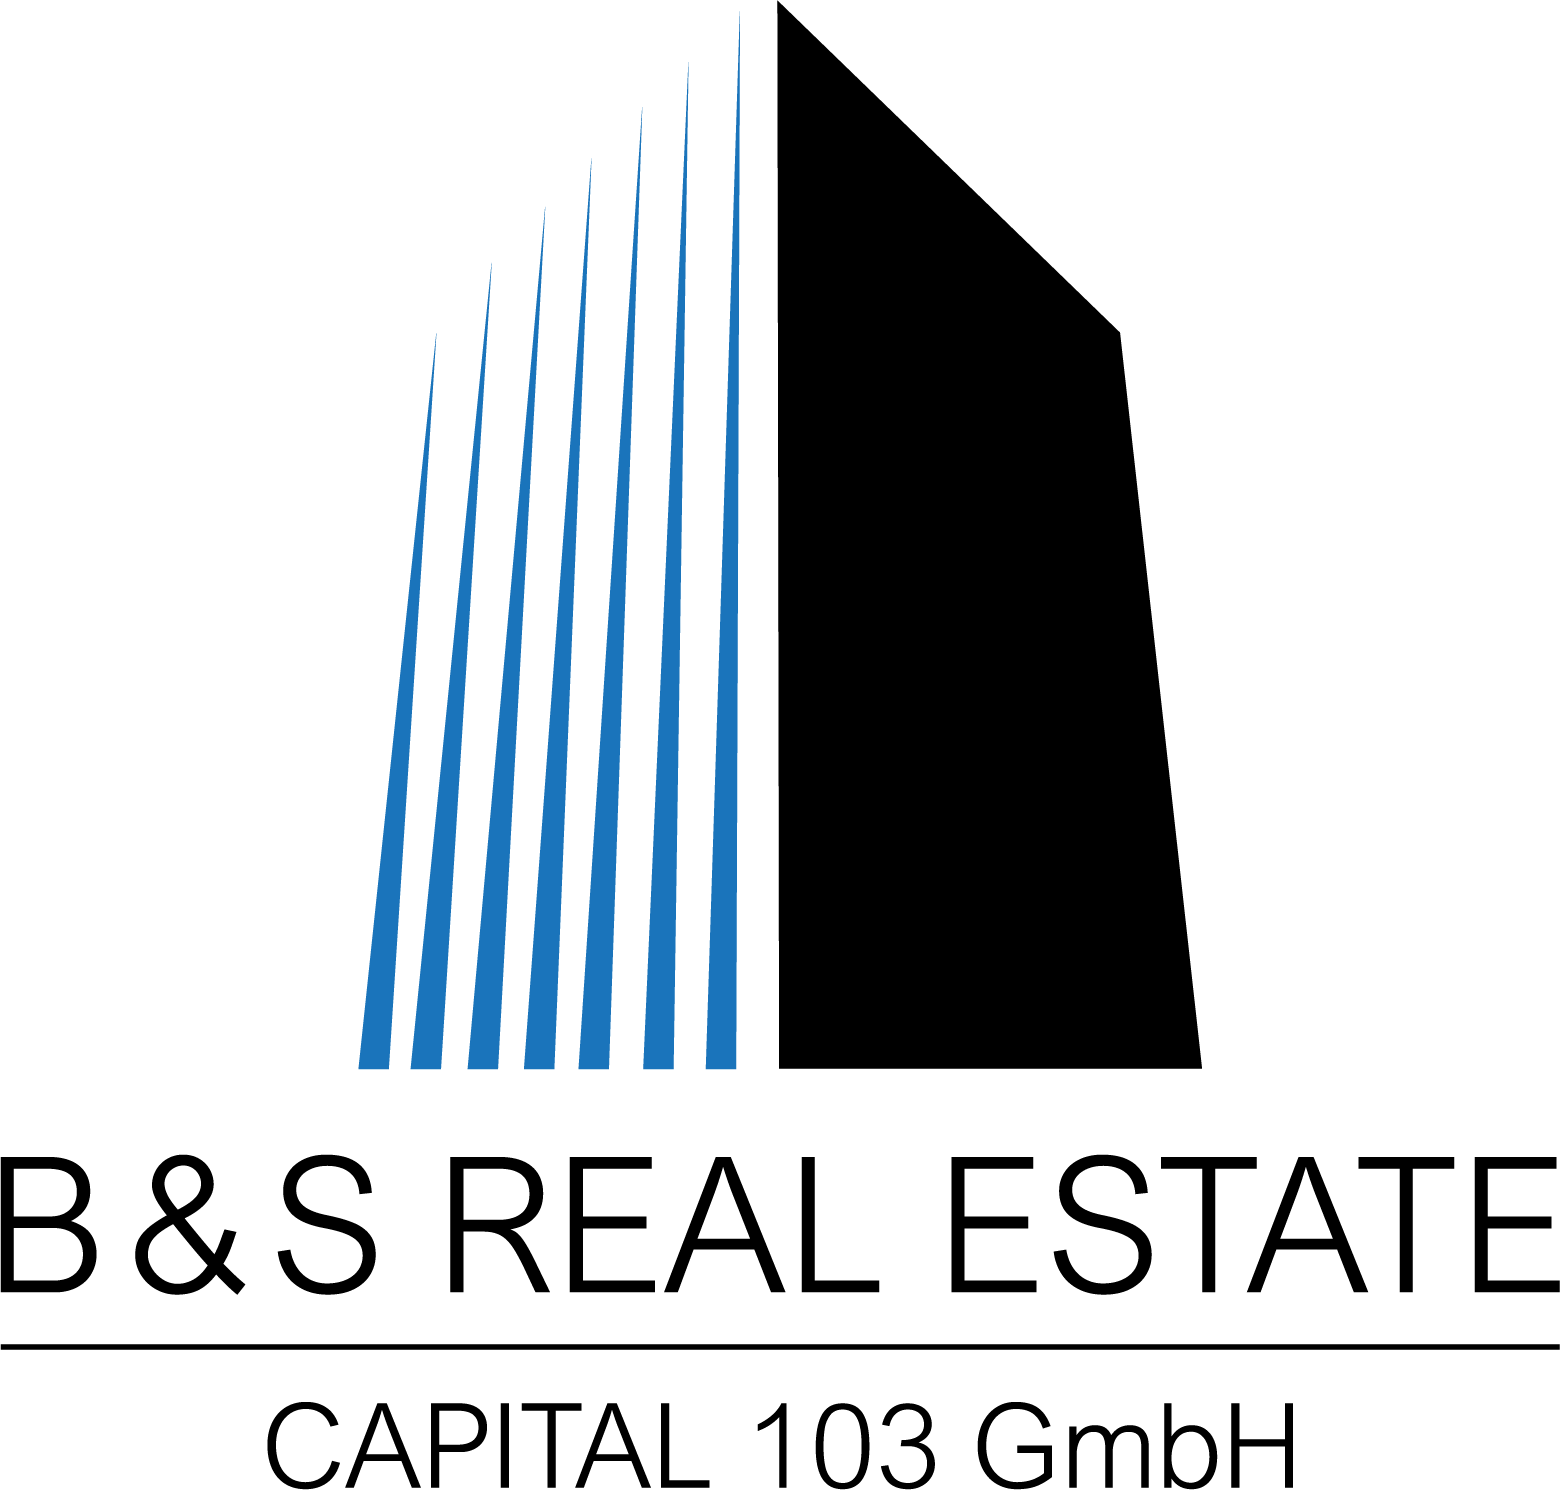 B&S REAL ESTATE CAPITAL 103 GmbH Logo